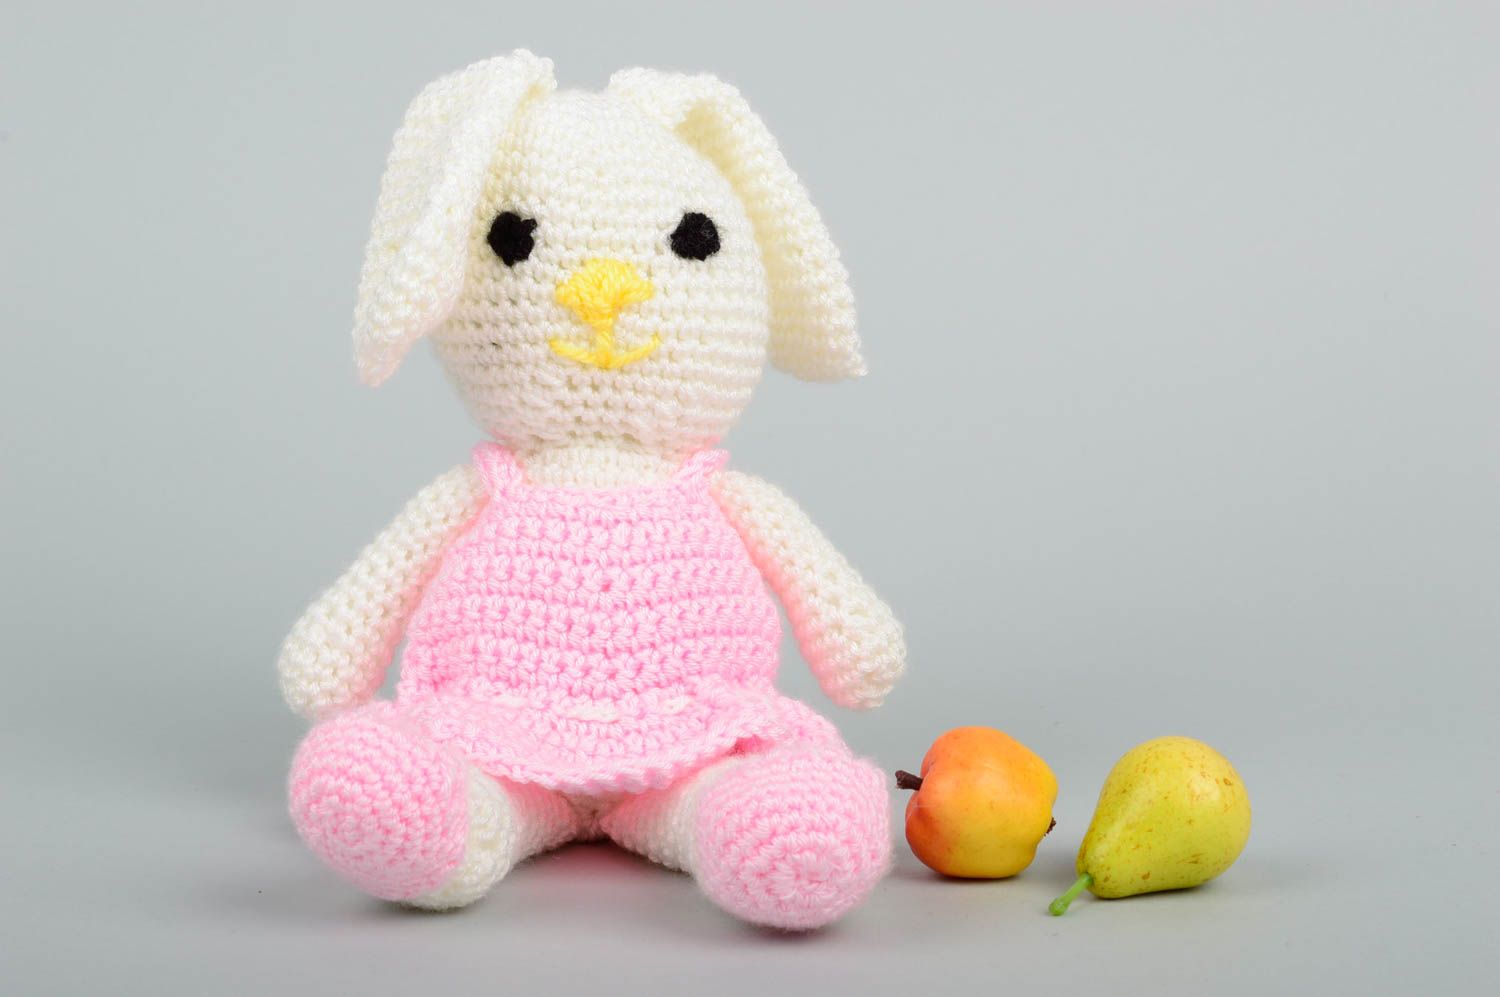 Beautiful handmade crochet soft toy childrens toys nursery design gift ideas photo 1